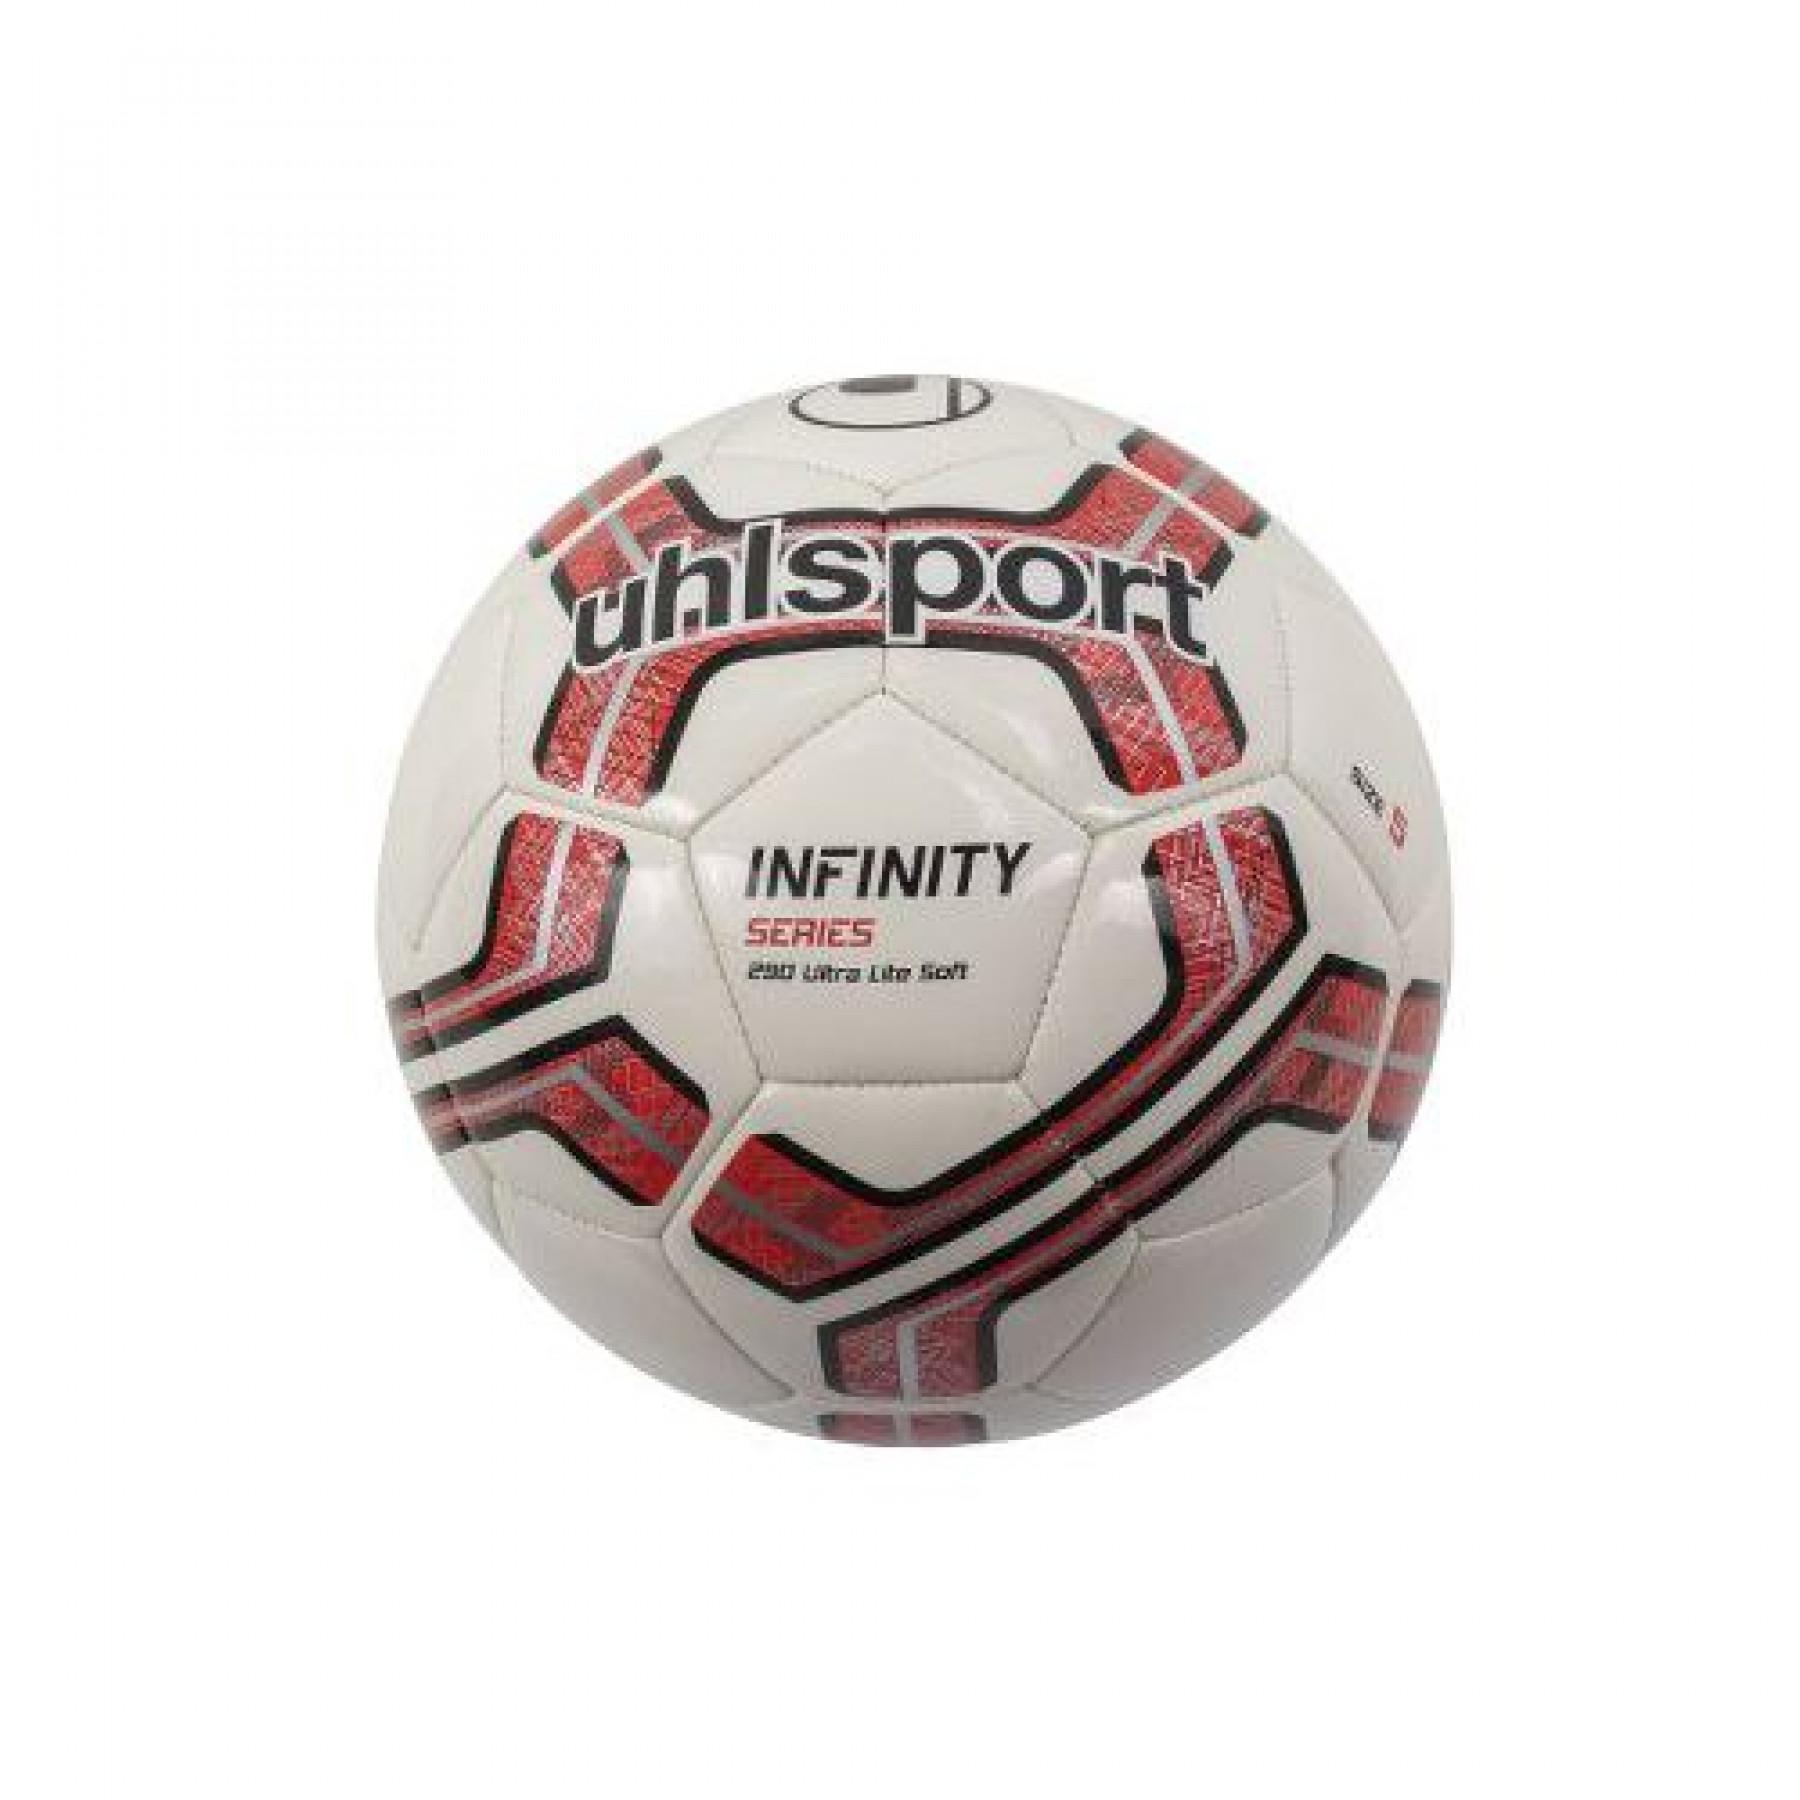 Pallone Uhlsport Infinity 290 Ultra Lite Soft